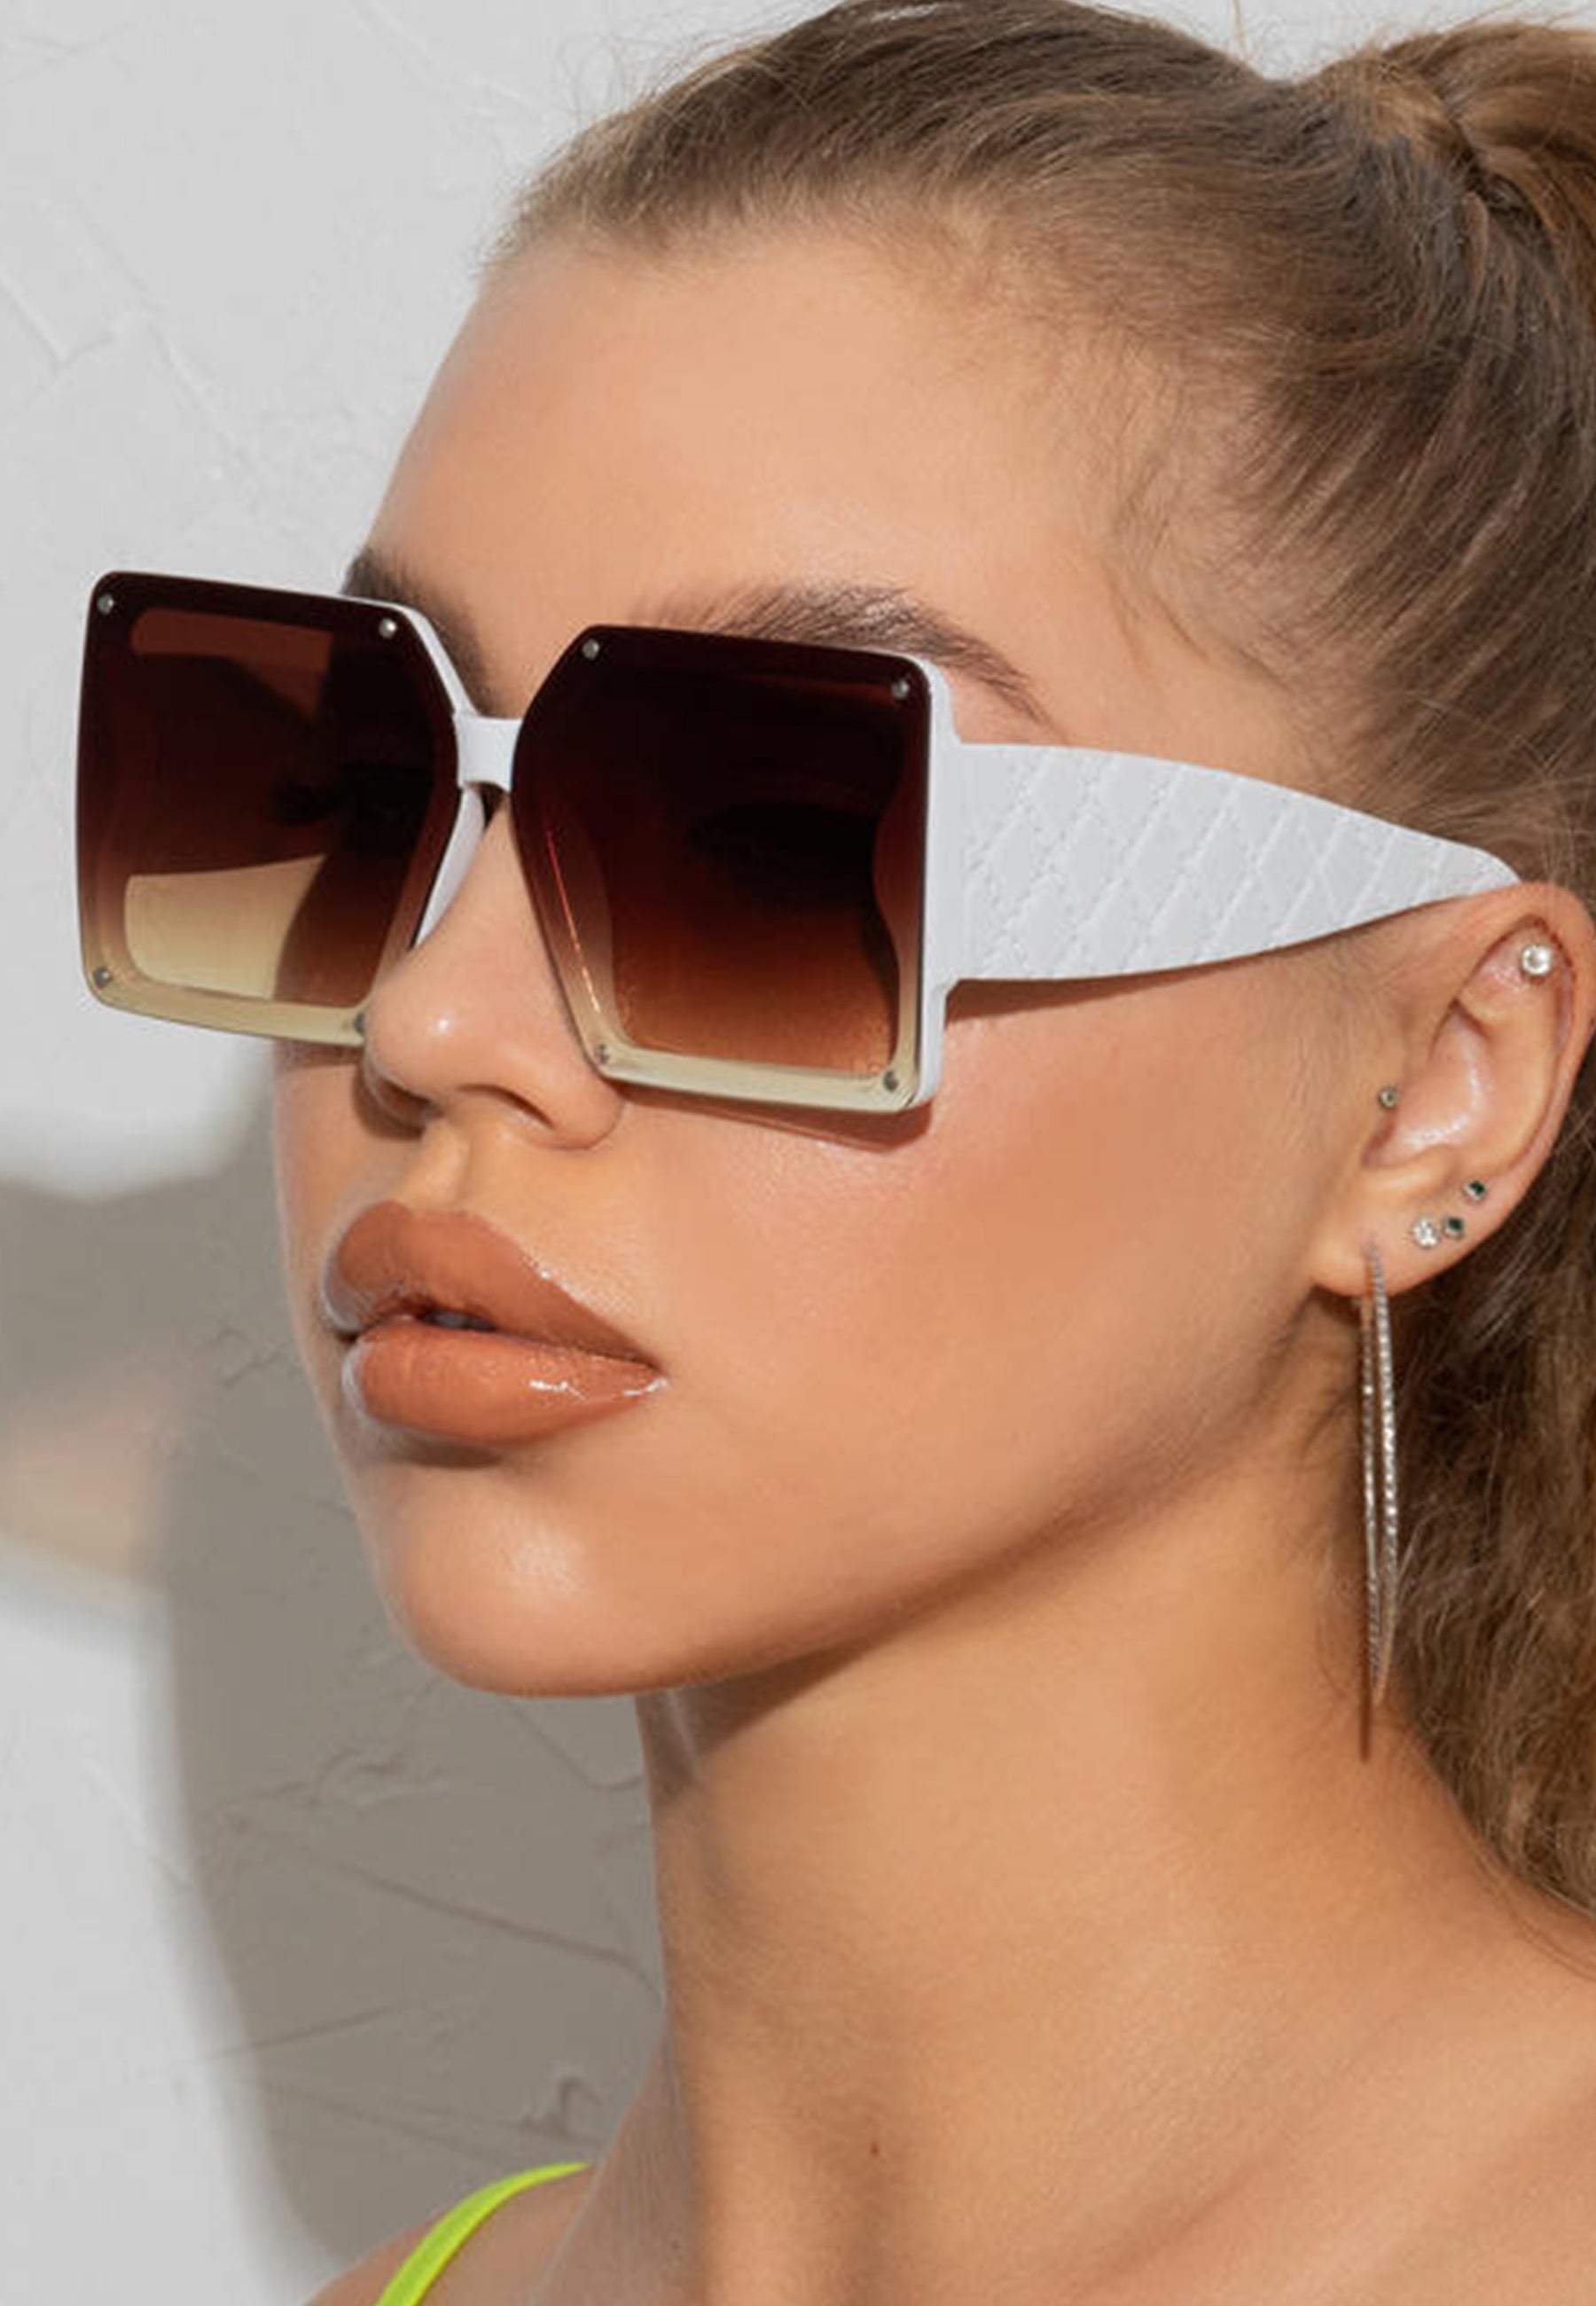 Square Shape Oversized Sunglasses